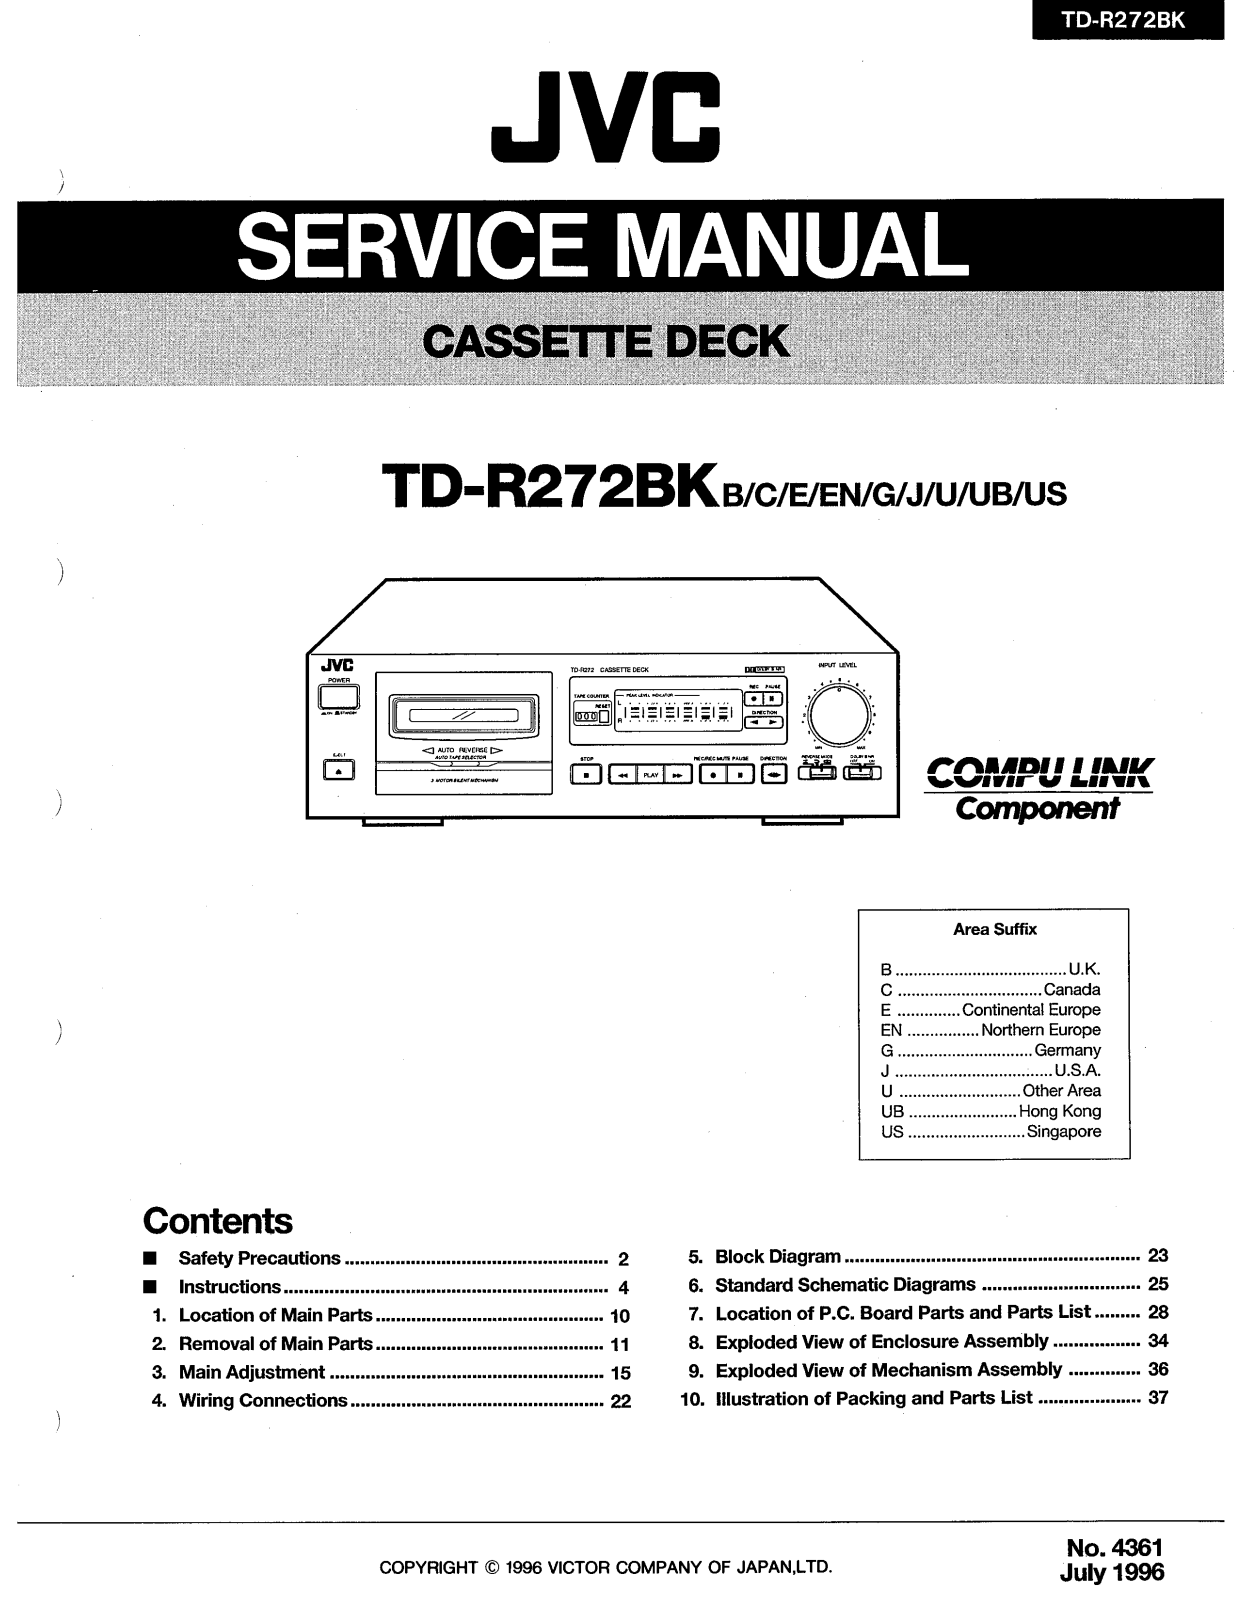 JVC TD-R272BKB, TD-R272BKC, TD-R272BKE, TD-R272BKEN, TD-R272BKG Service Manual